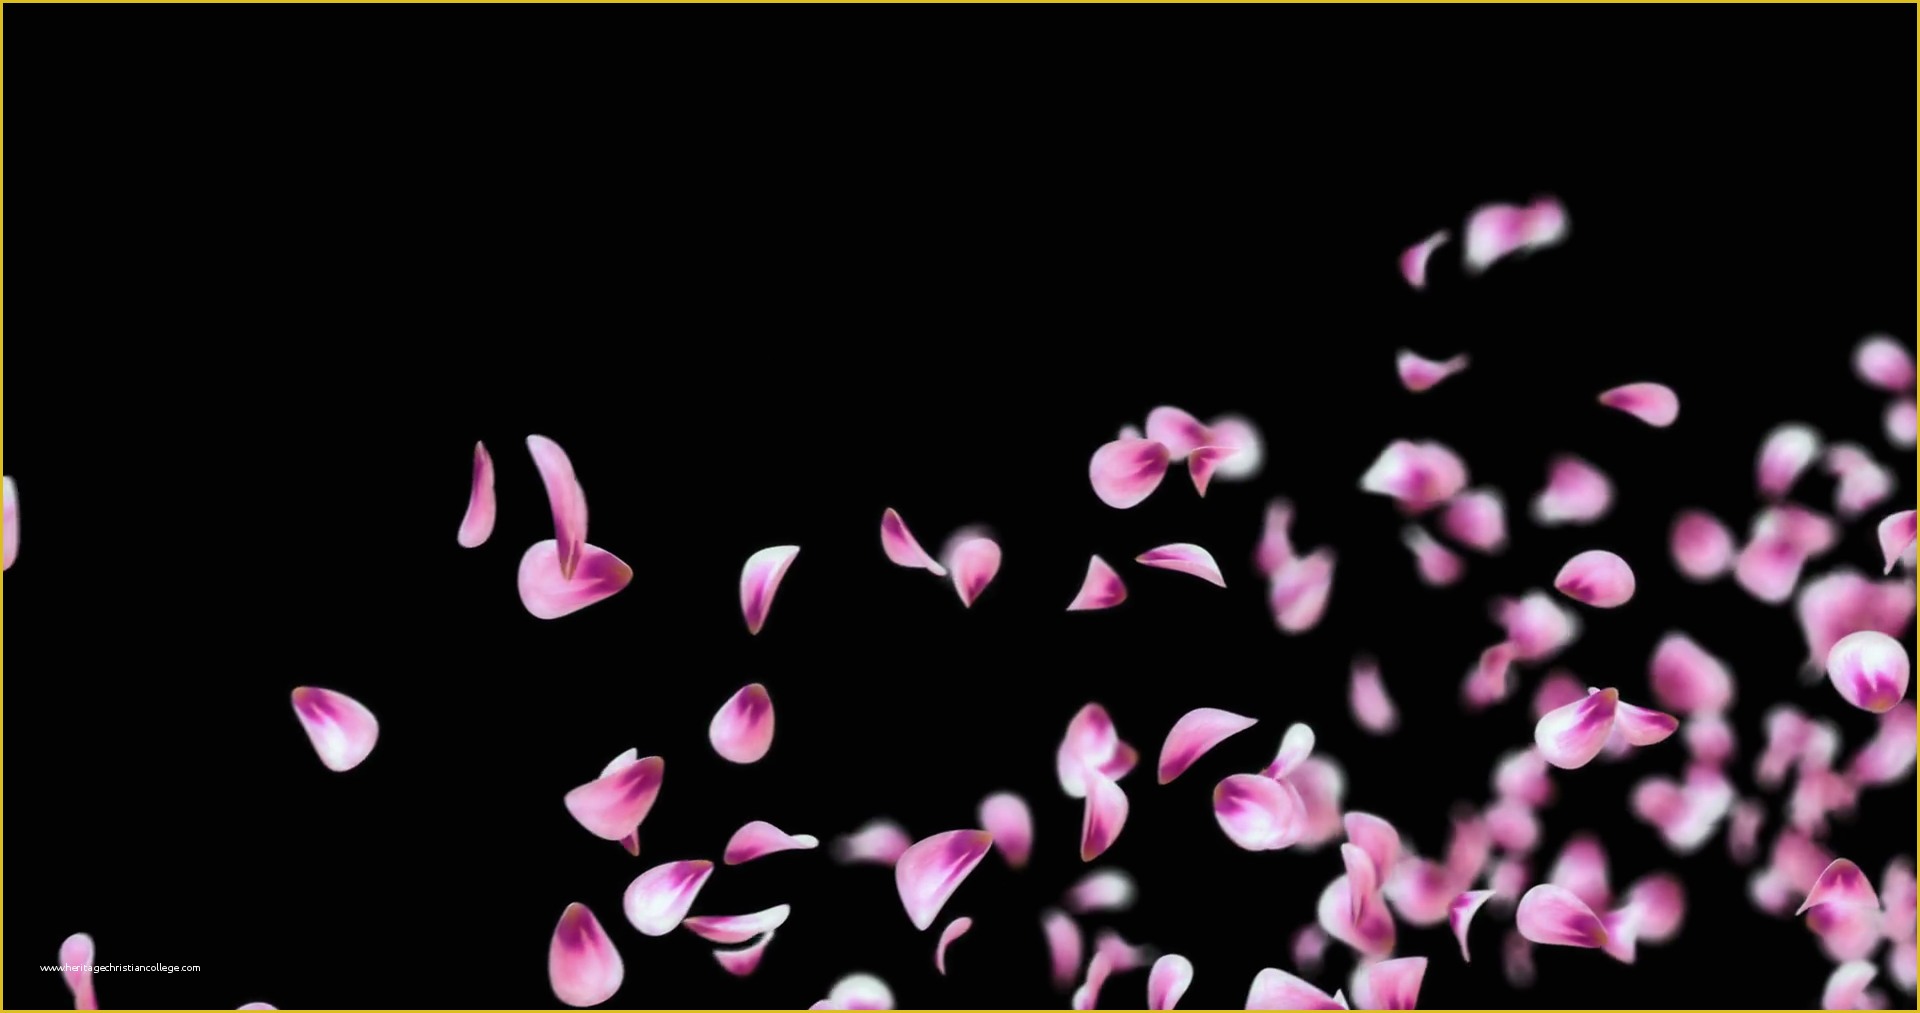 Falling Flower Petals after Effects Template Free Of Flying Pink Rose Sakura Flower Petals Falling Placeholder